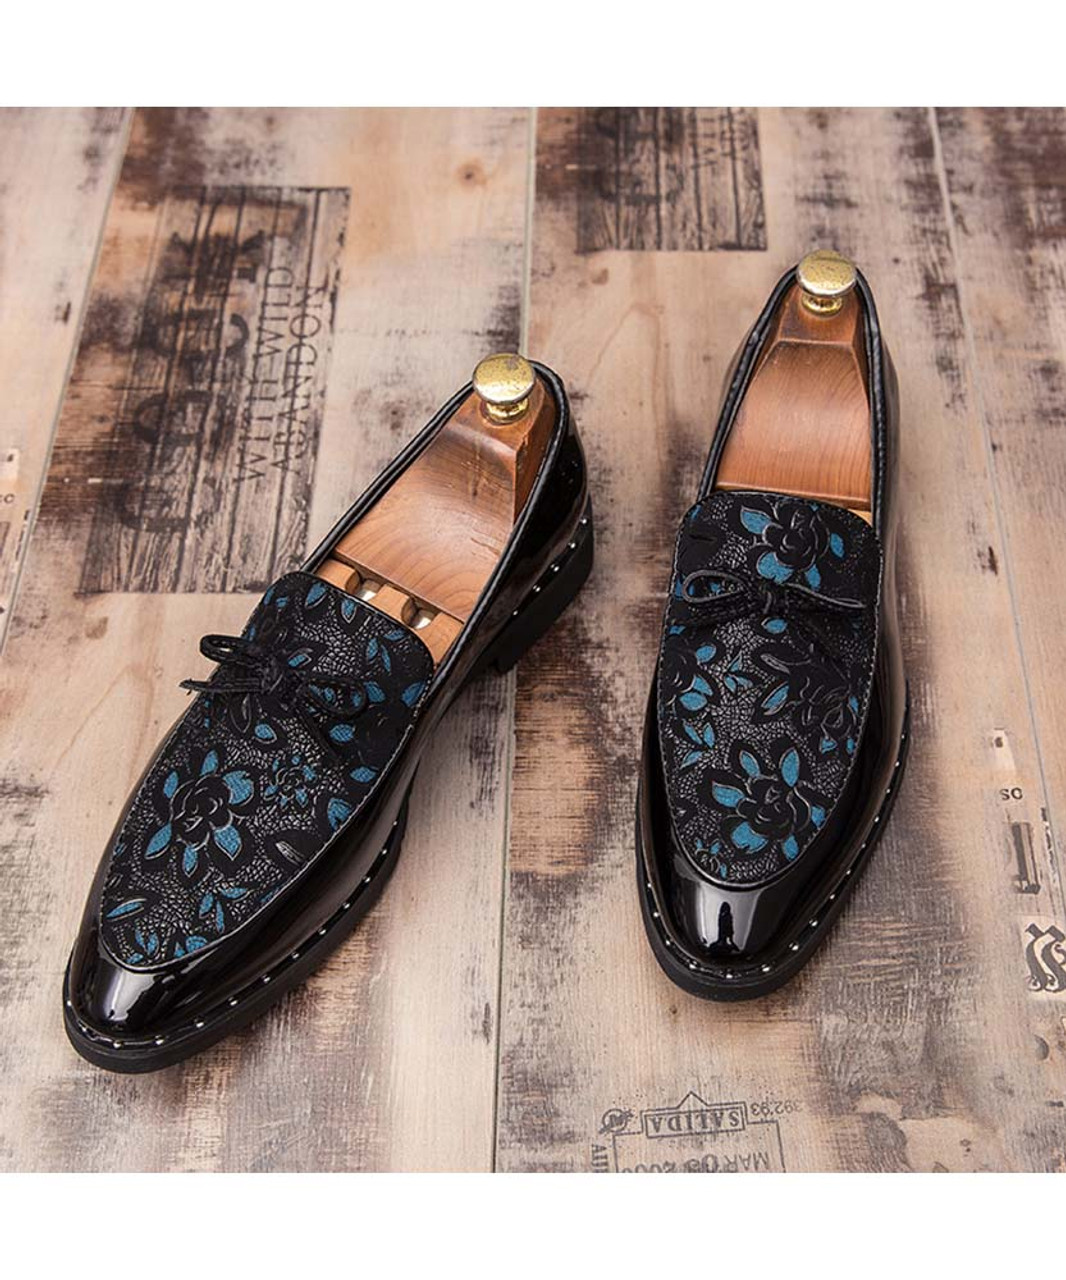 Black blue floral pattern slip on dress shoe with bow tie | Mens dress ...